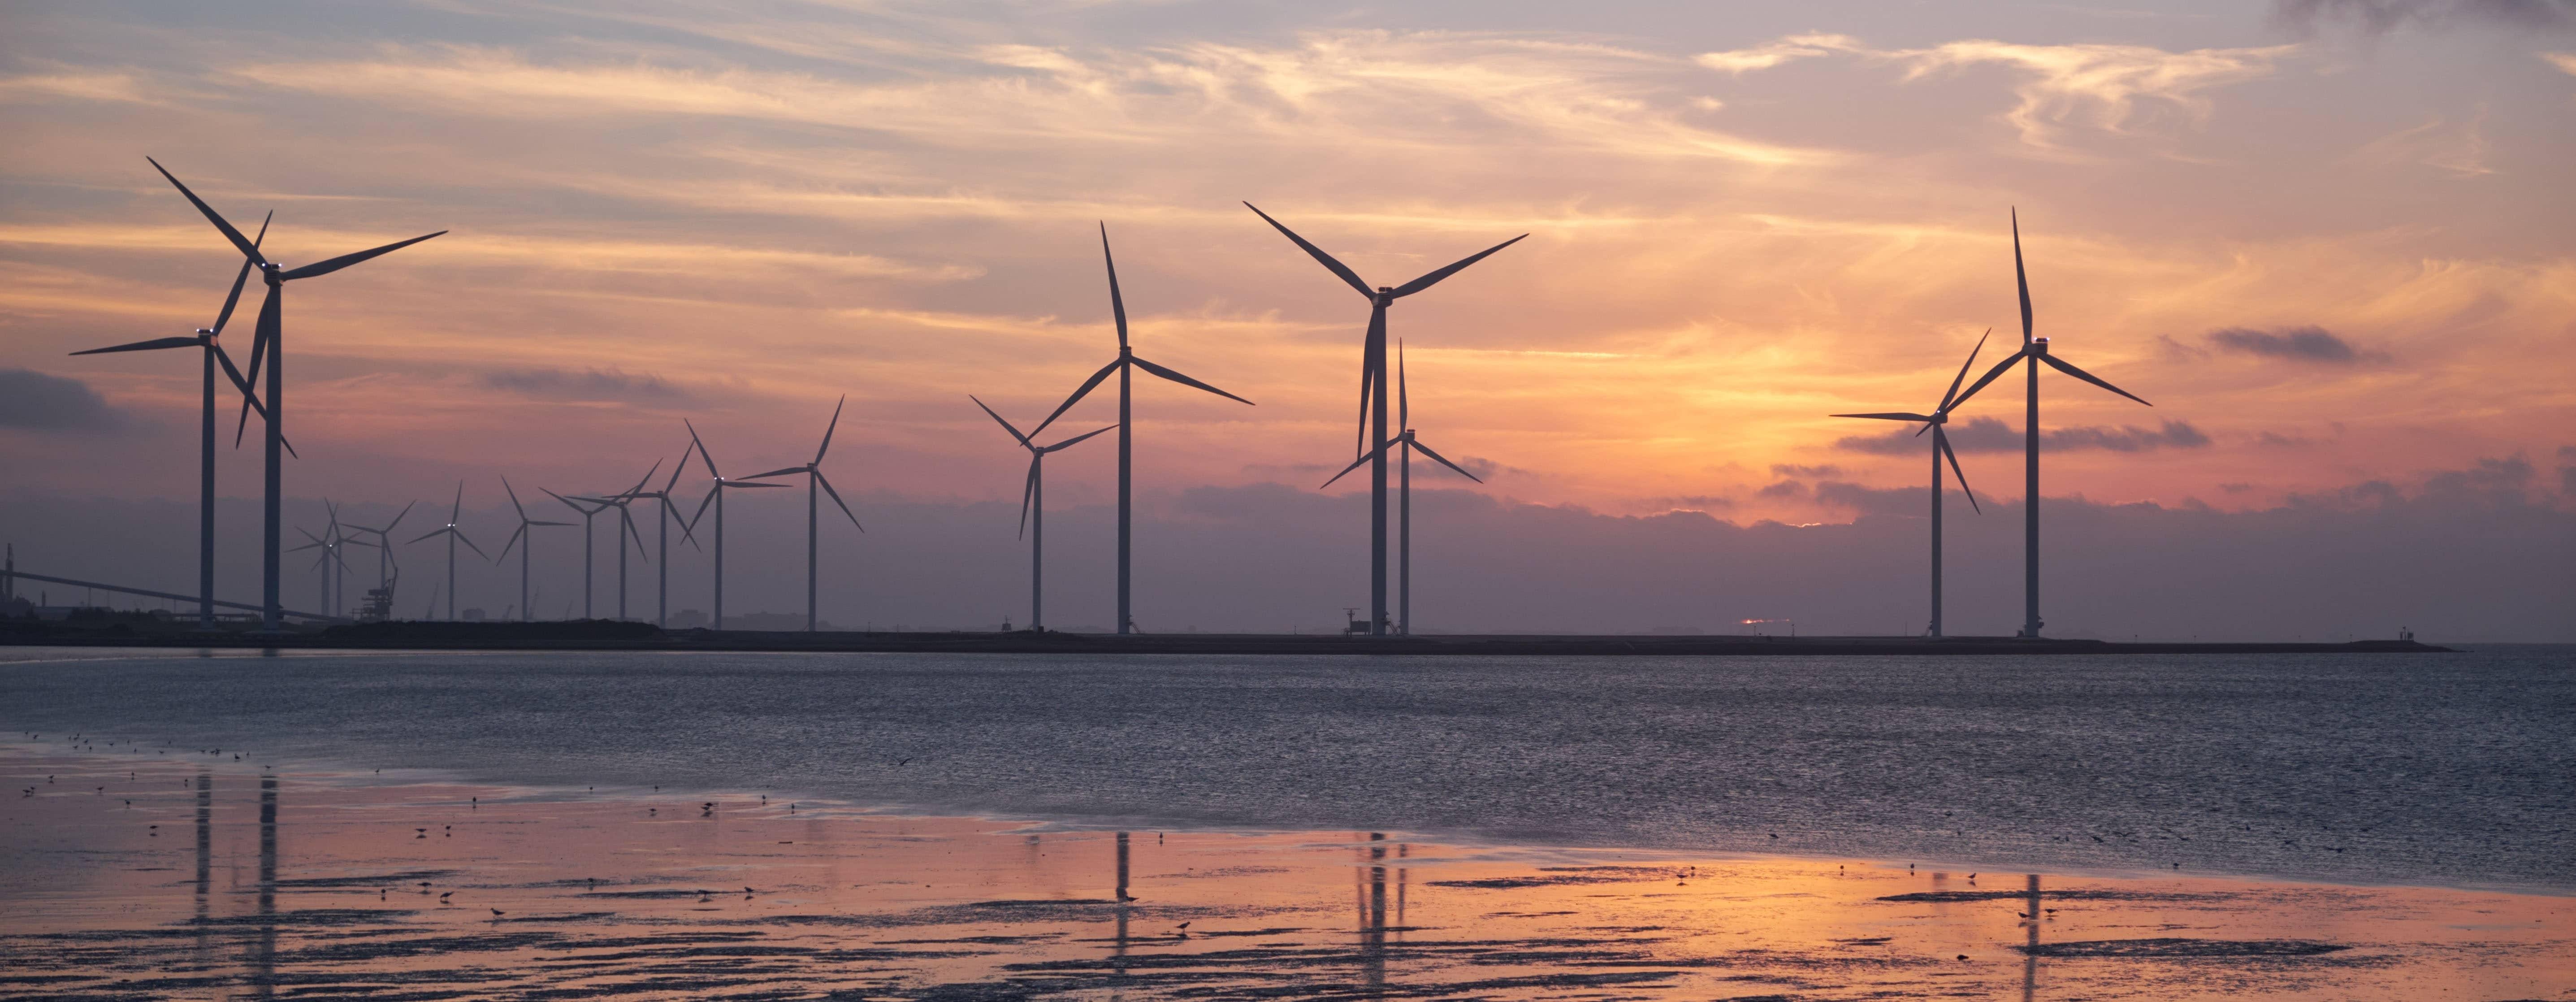 Wind turbines on ocean coast with sun setting.